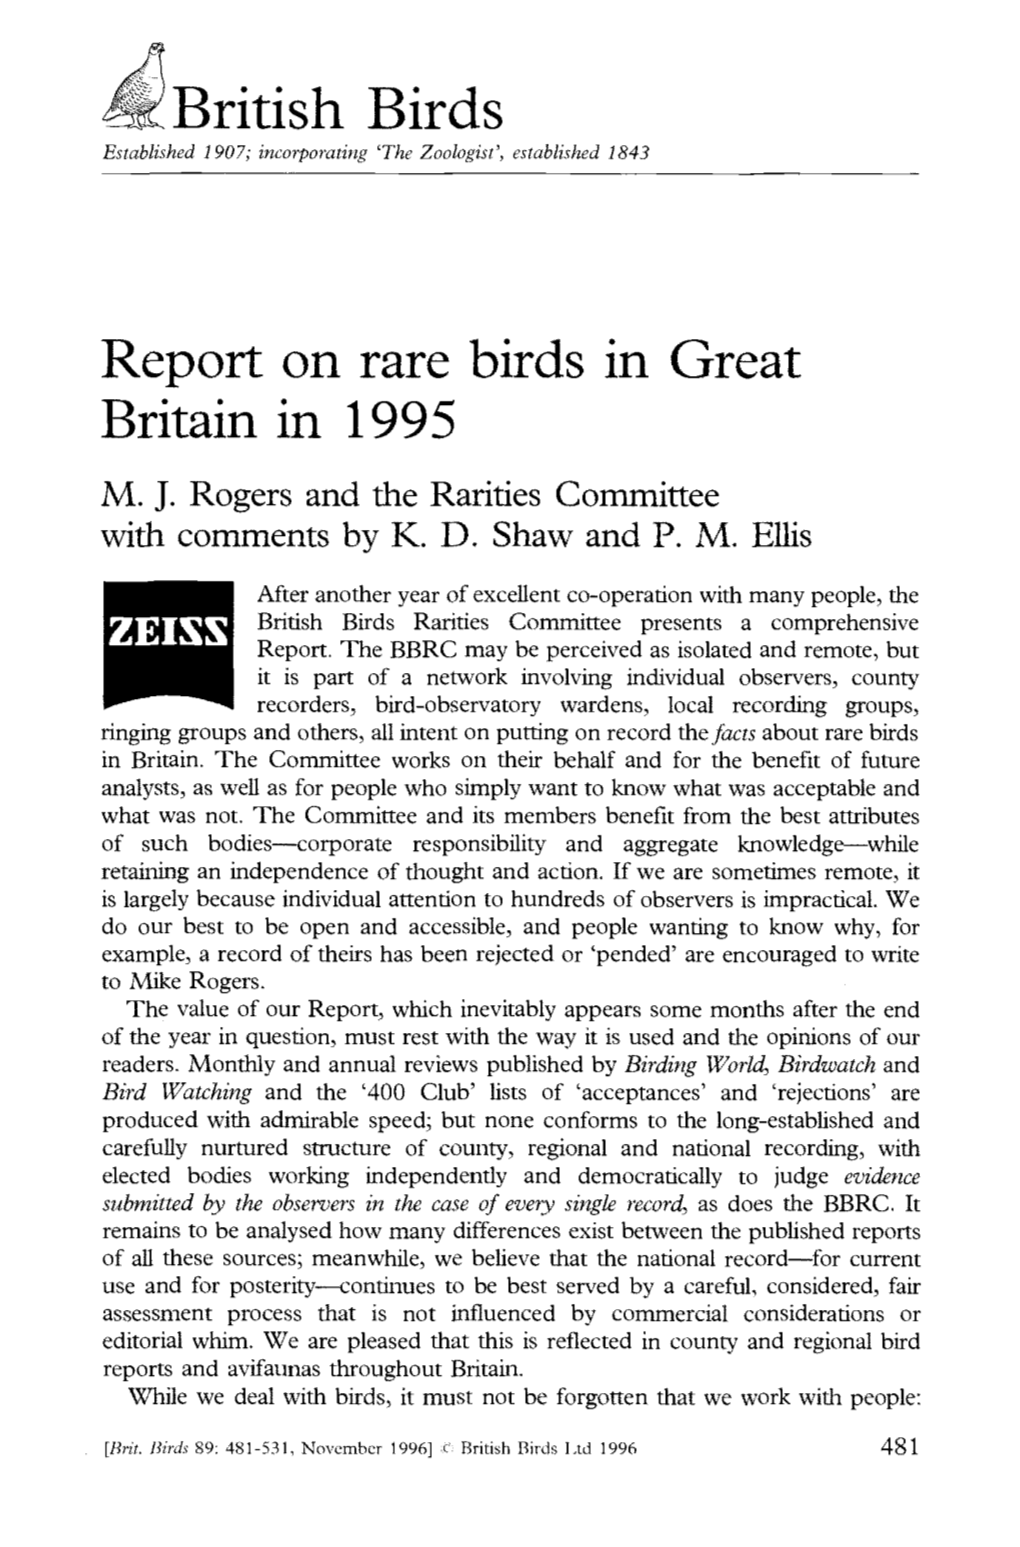 British Birds Report on Rare Birds in Great Britain in 1995